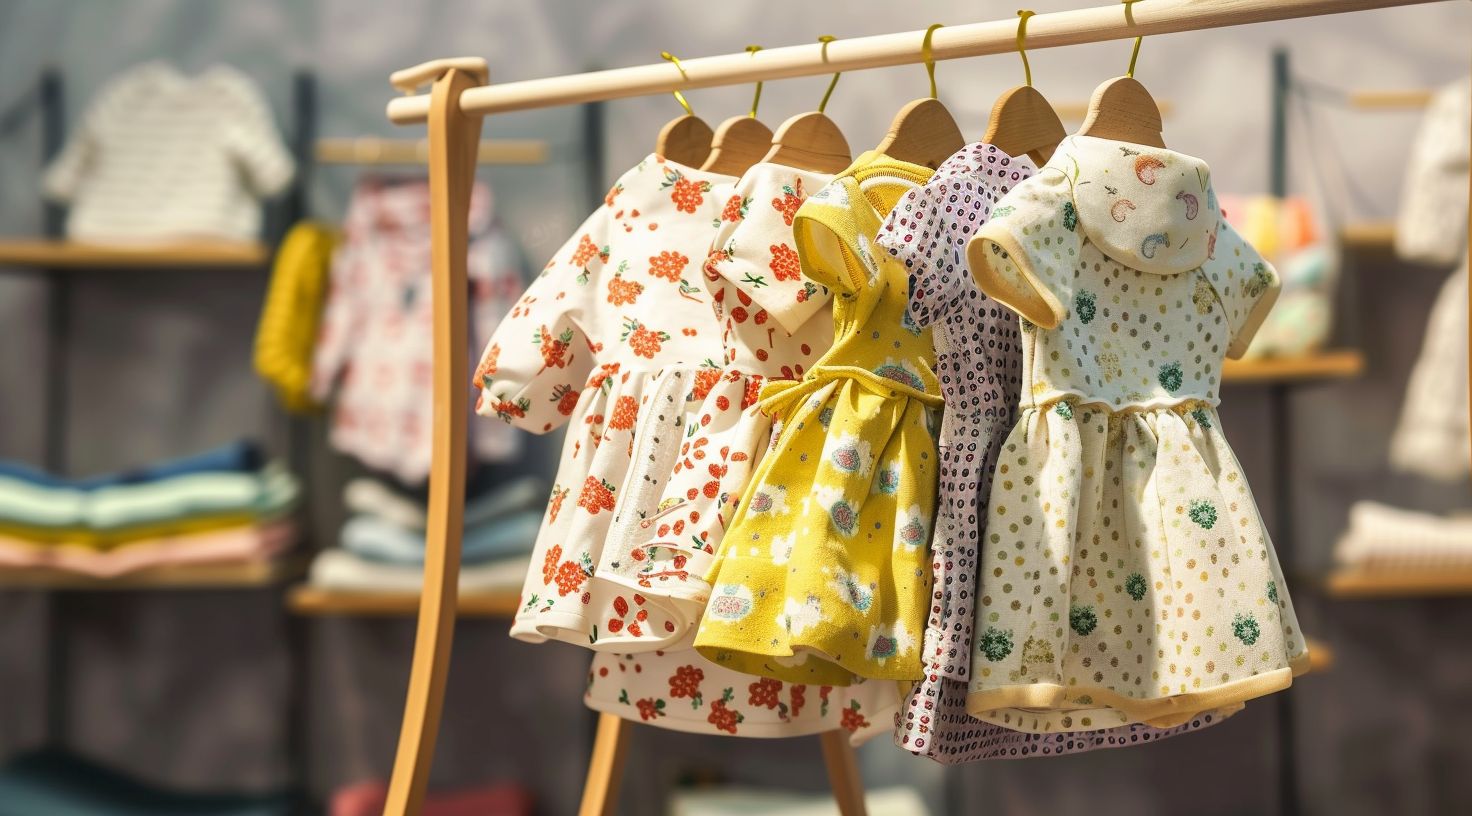 adorable newborn clothes on rack